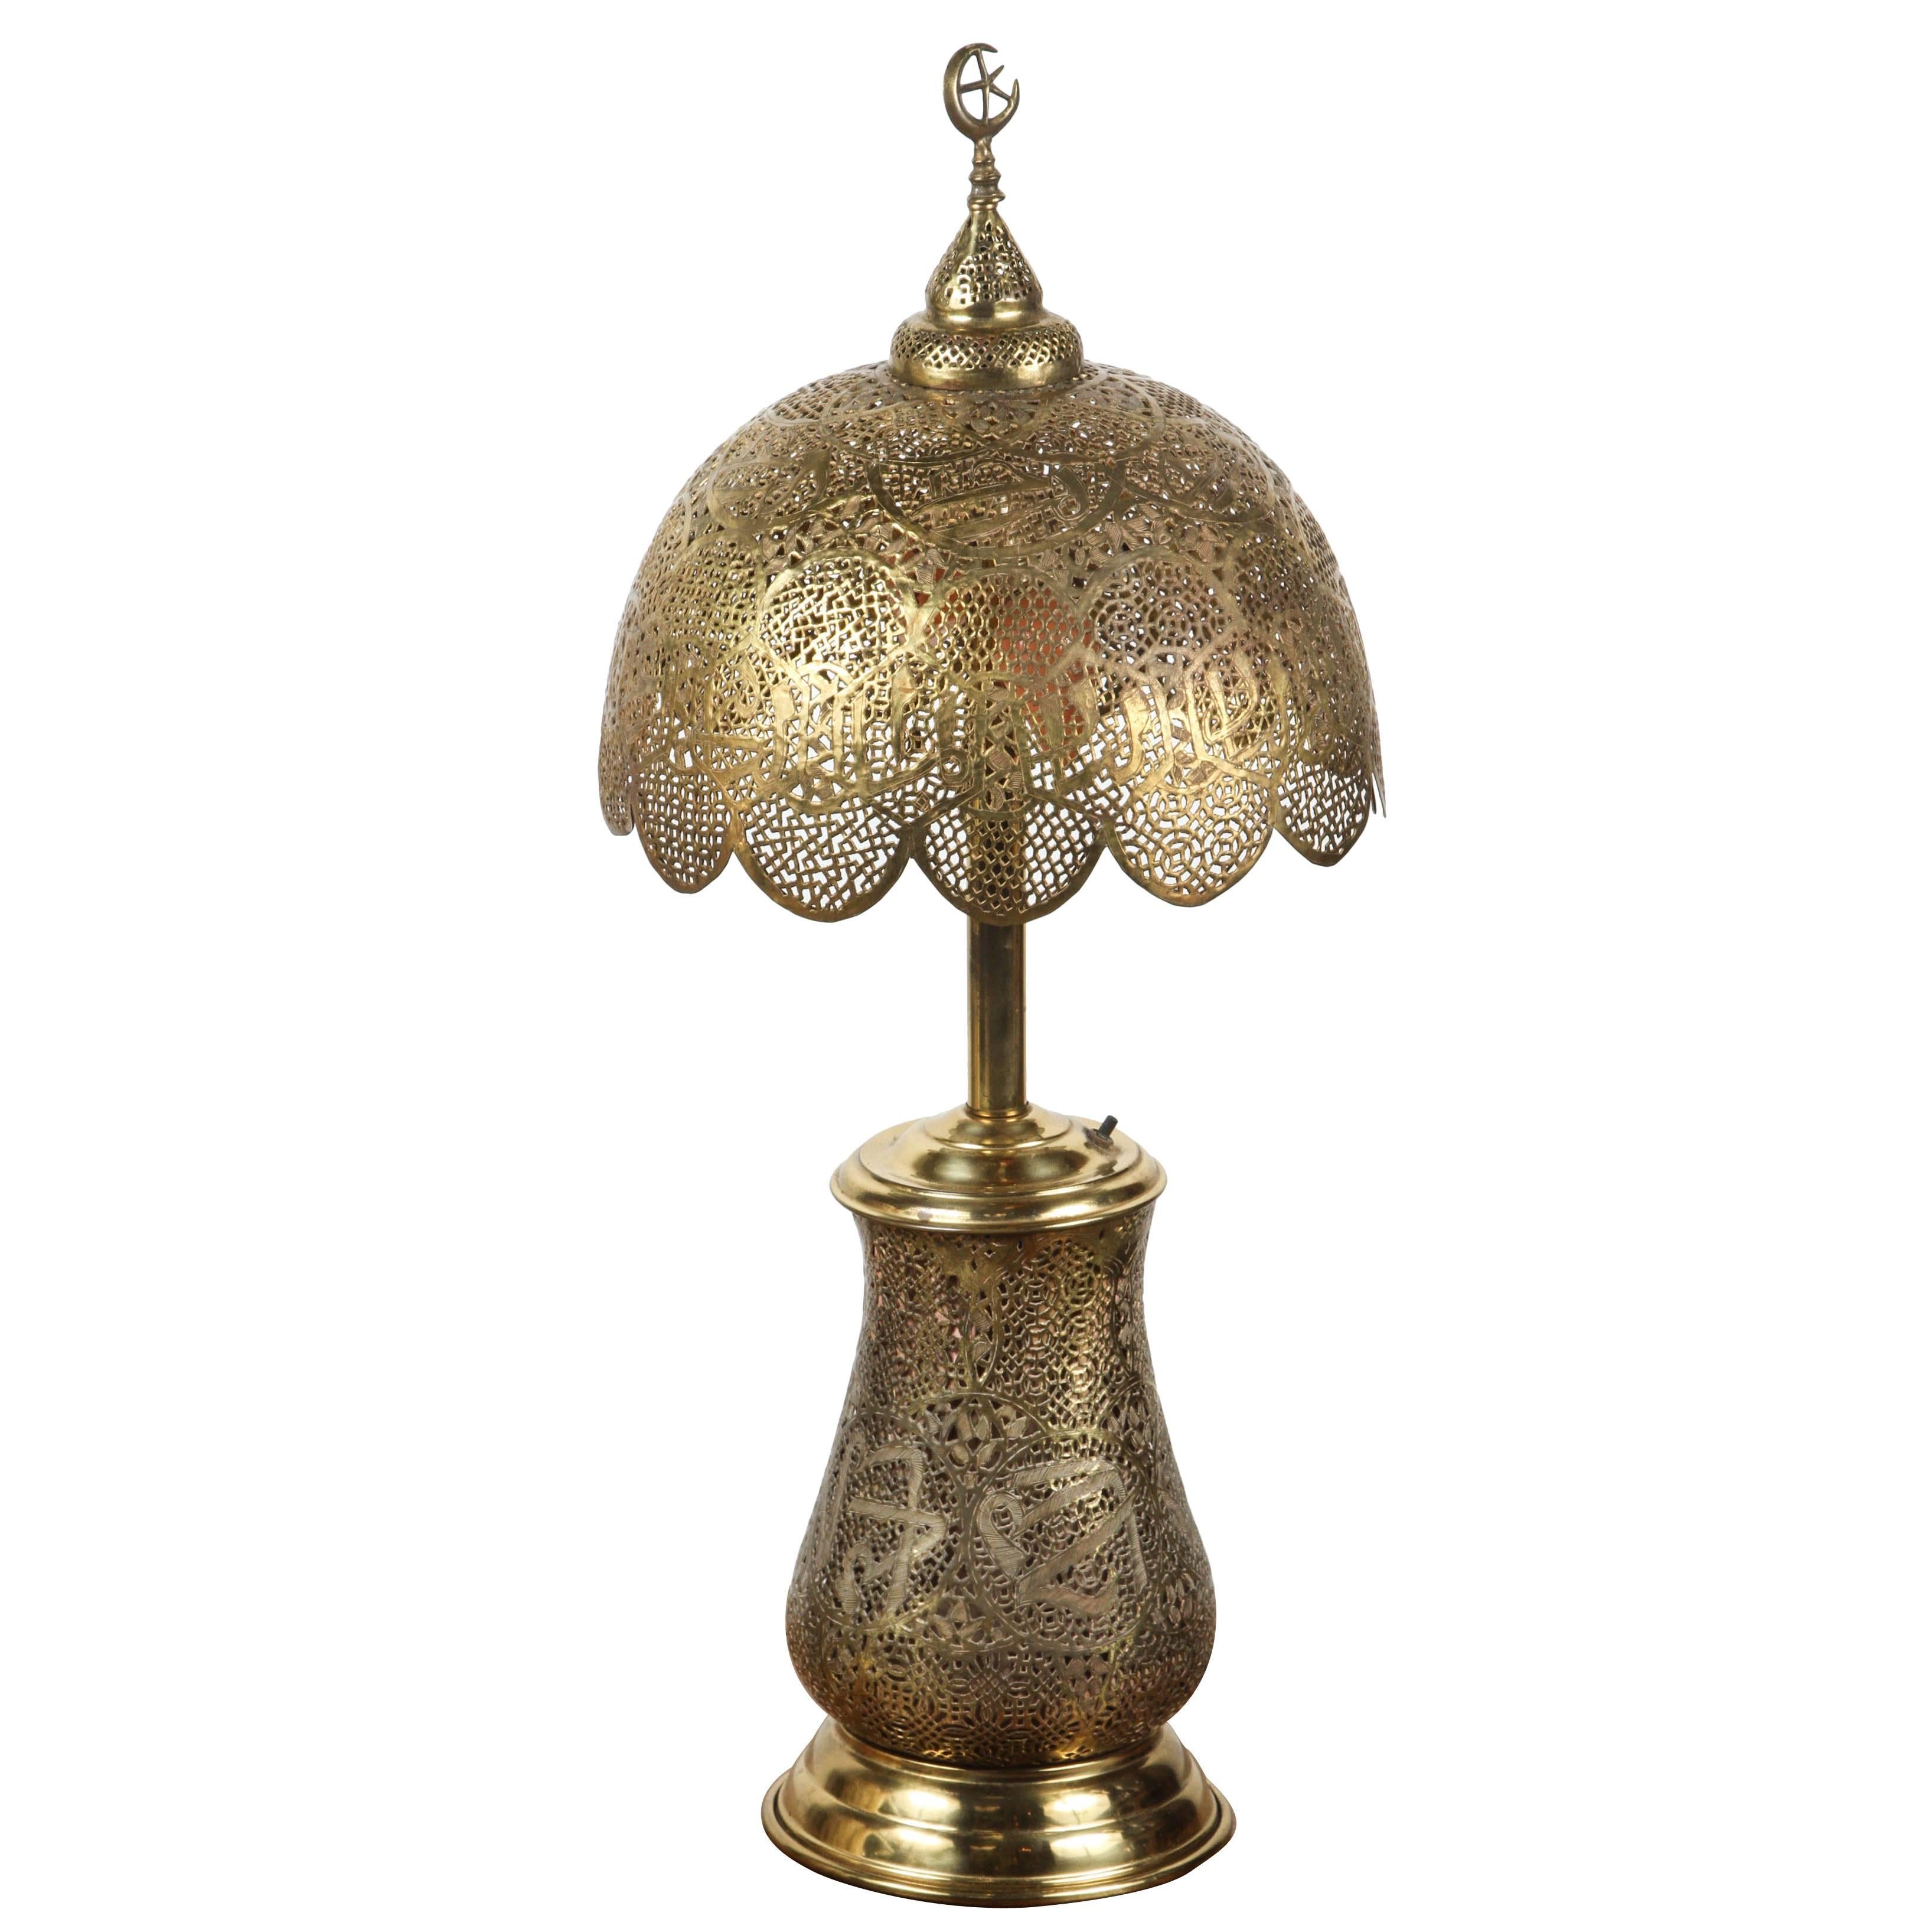 Moorish Revival Brass Syrian Table Lamp